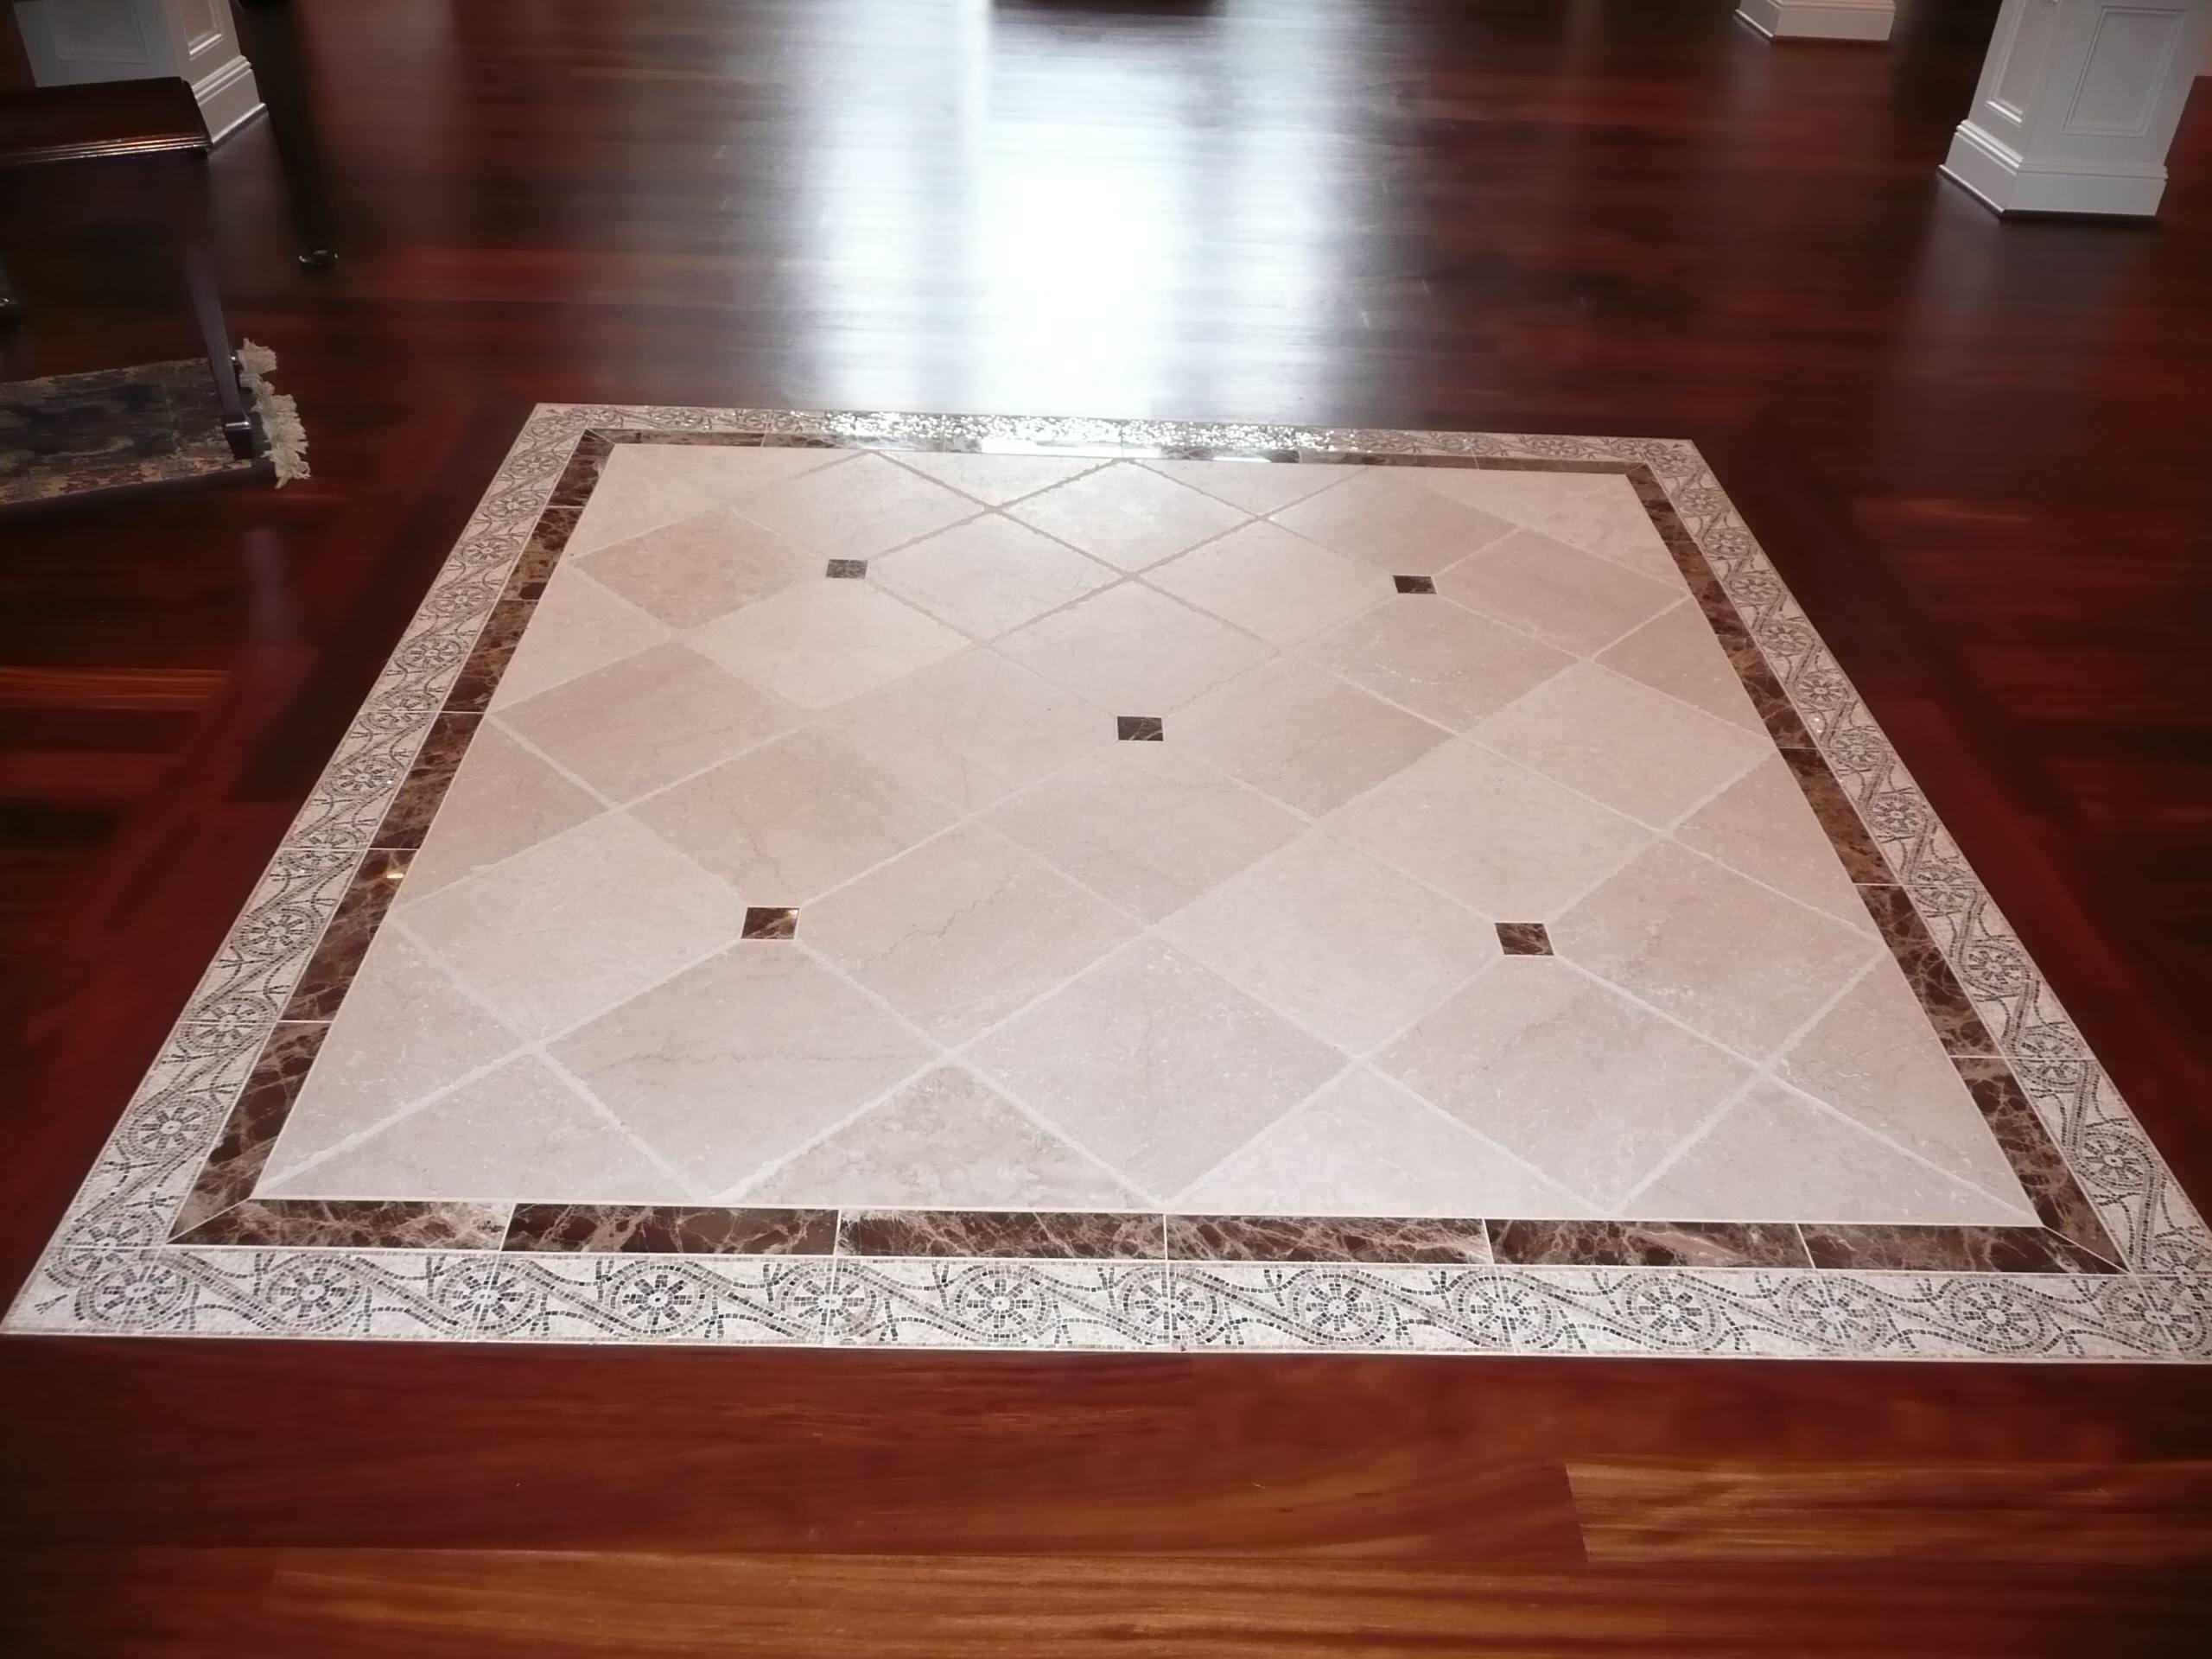 Wood Floor With Tile Inlay Houzz, Hardwood Floor Tile Inlay